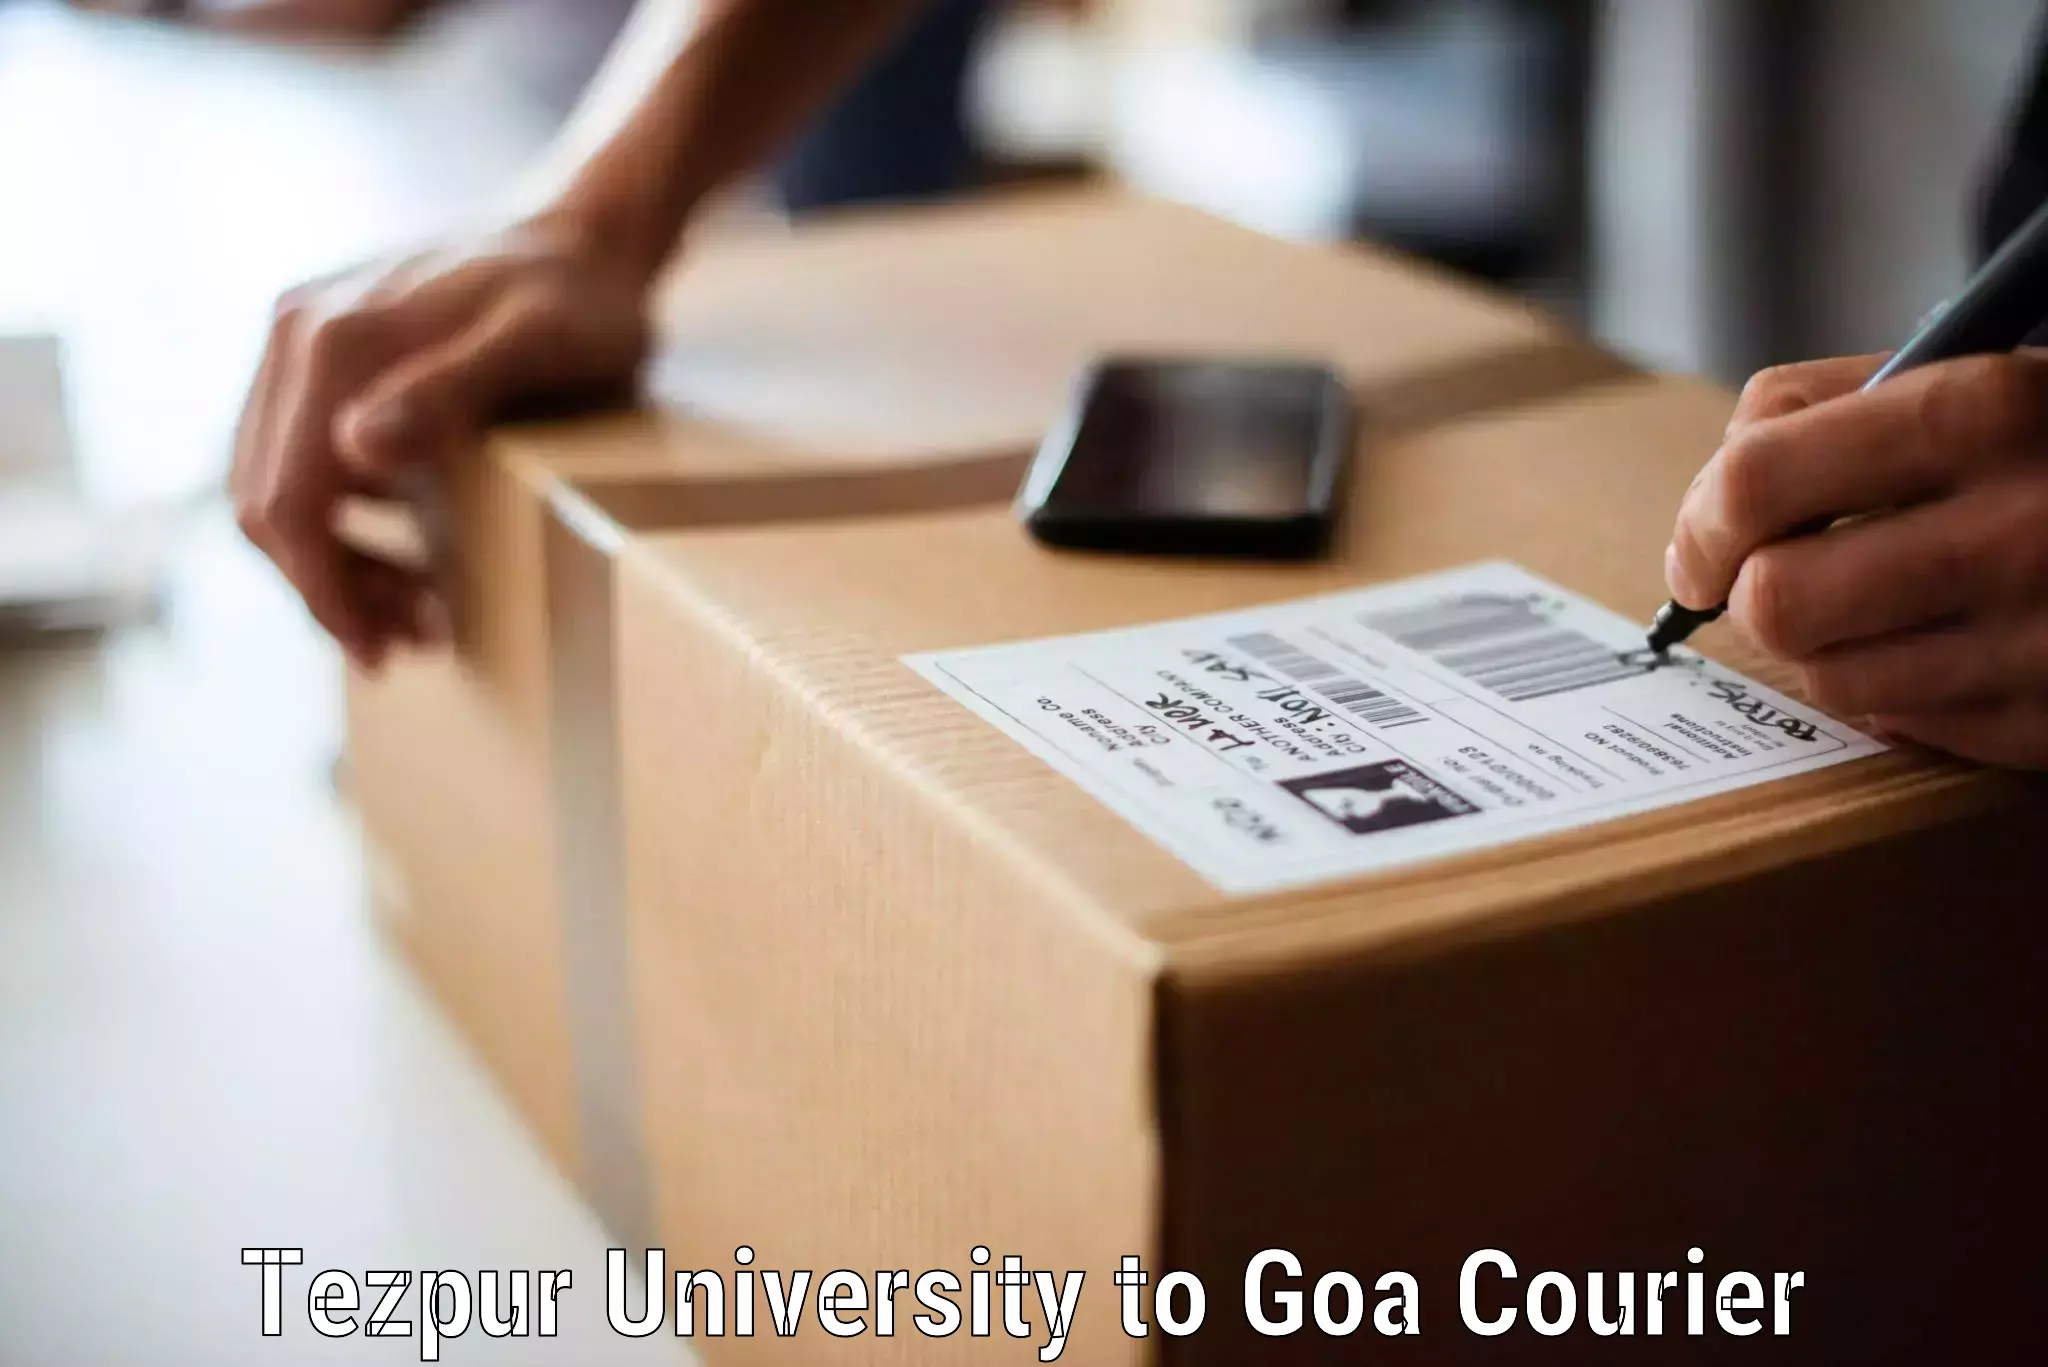 Quality moving company Tezpur University to Goa